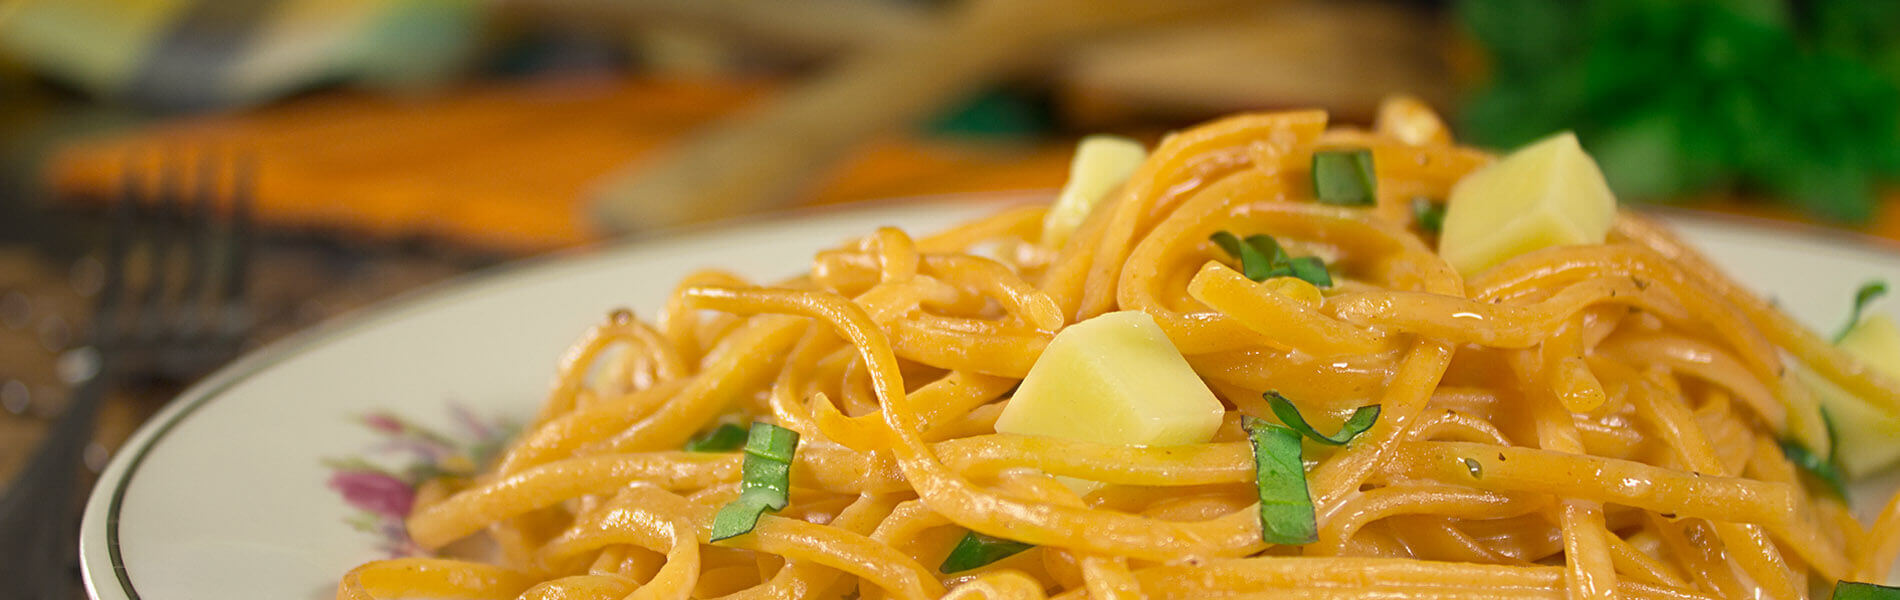 Spaghetti Tomate Doria a las Finas Hierbas con Queso Fresco